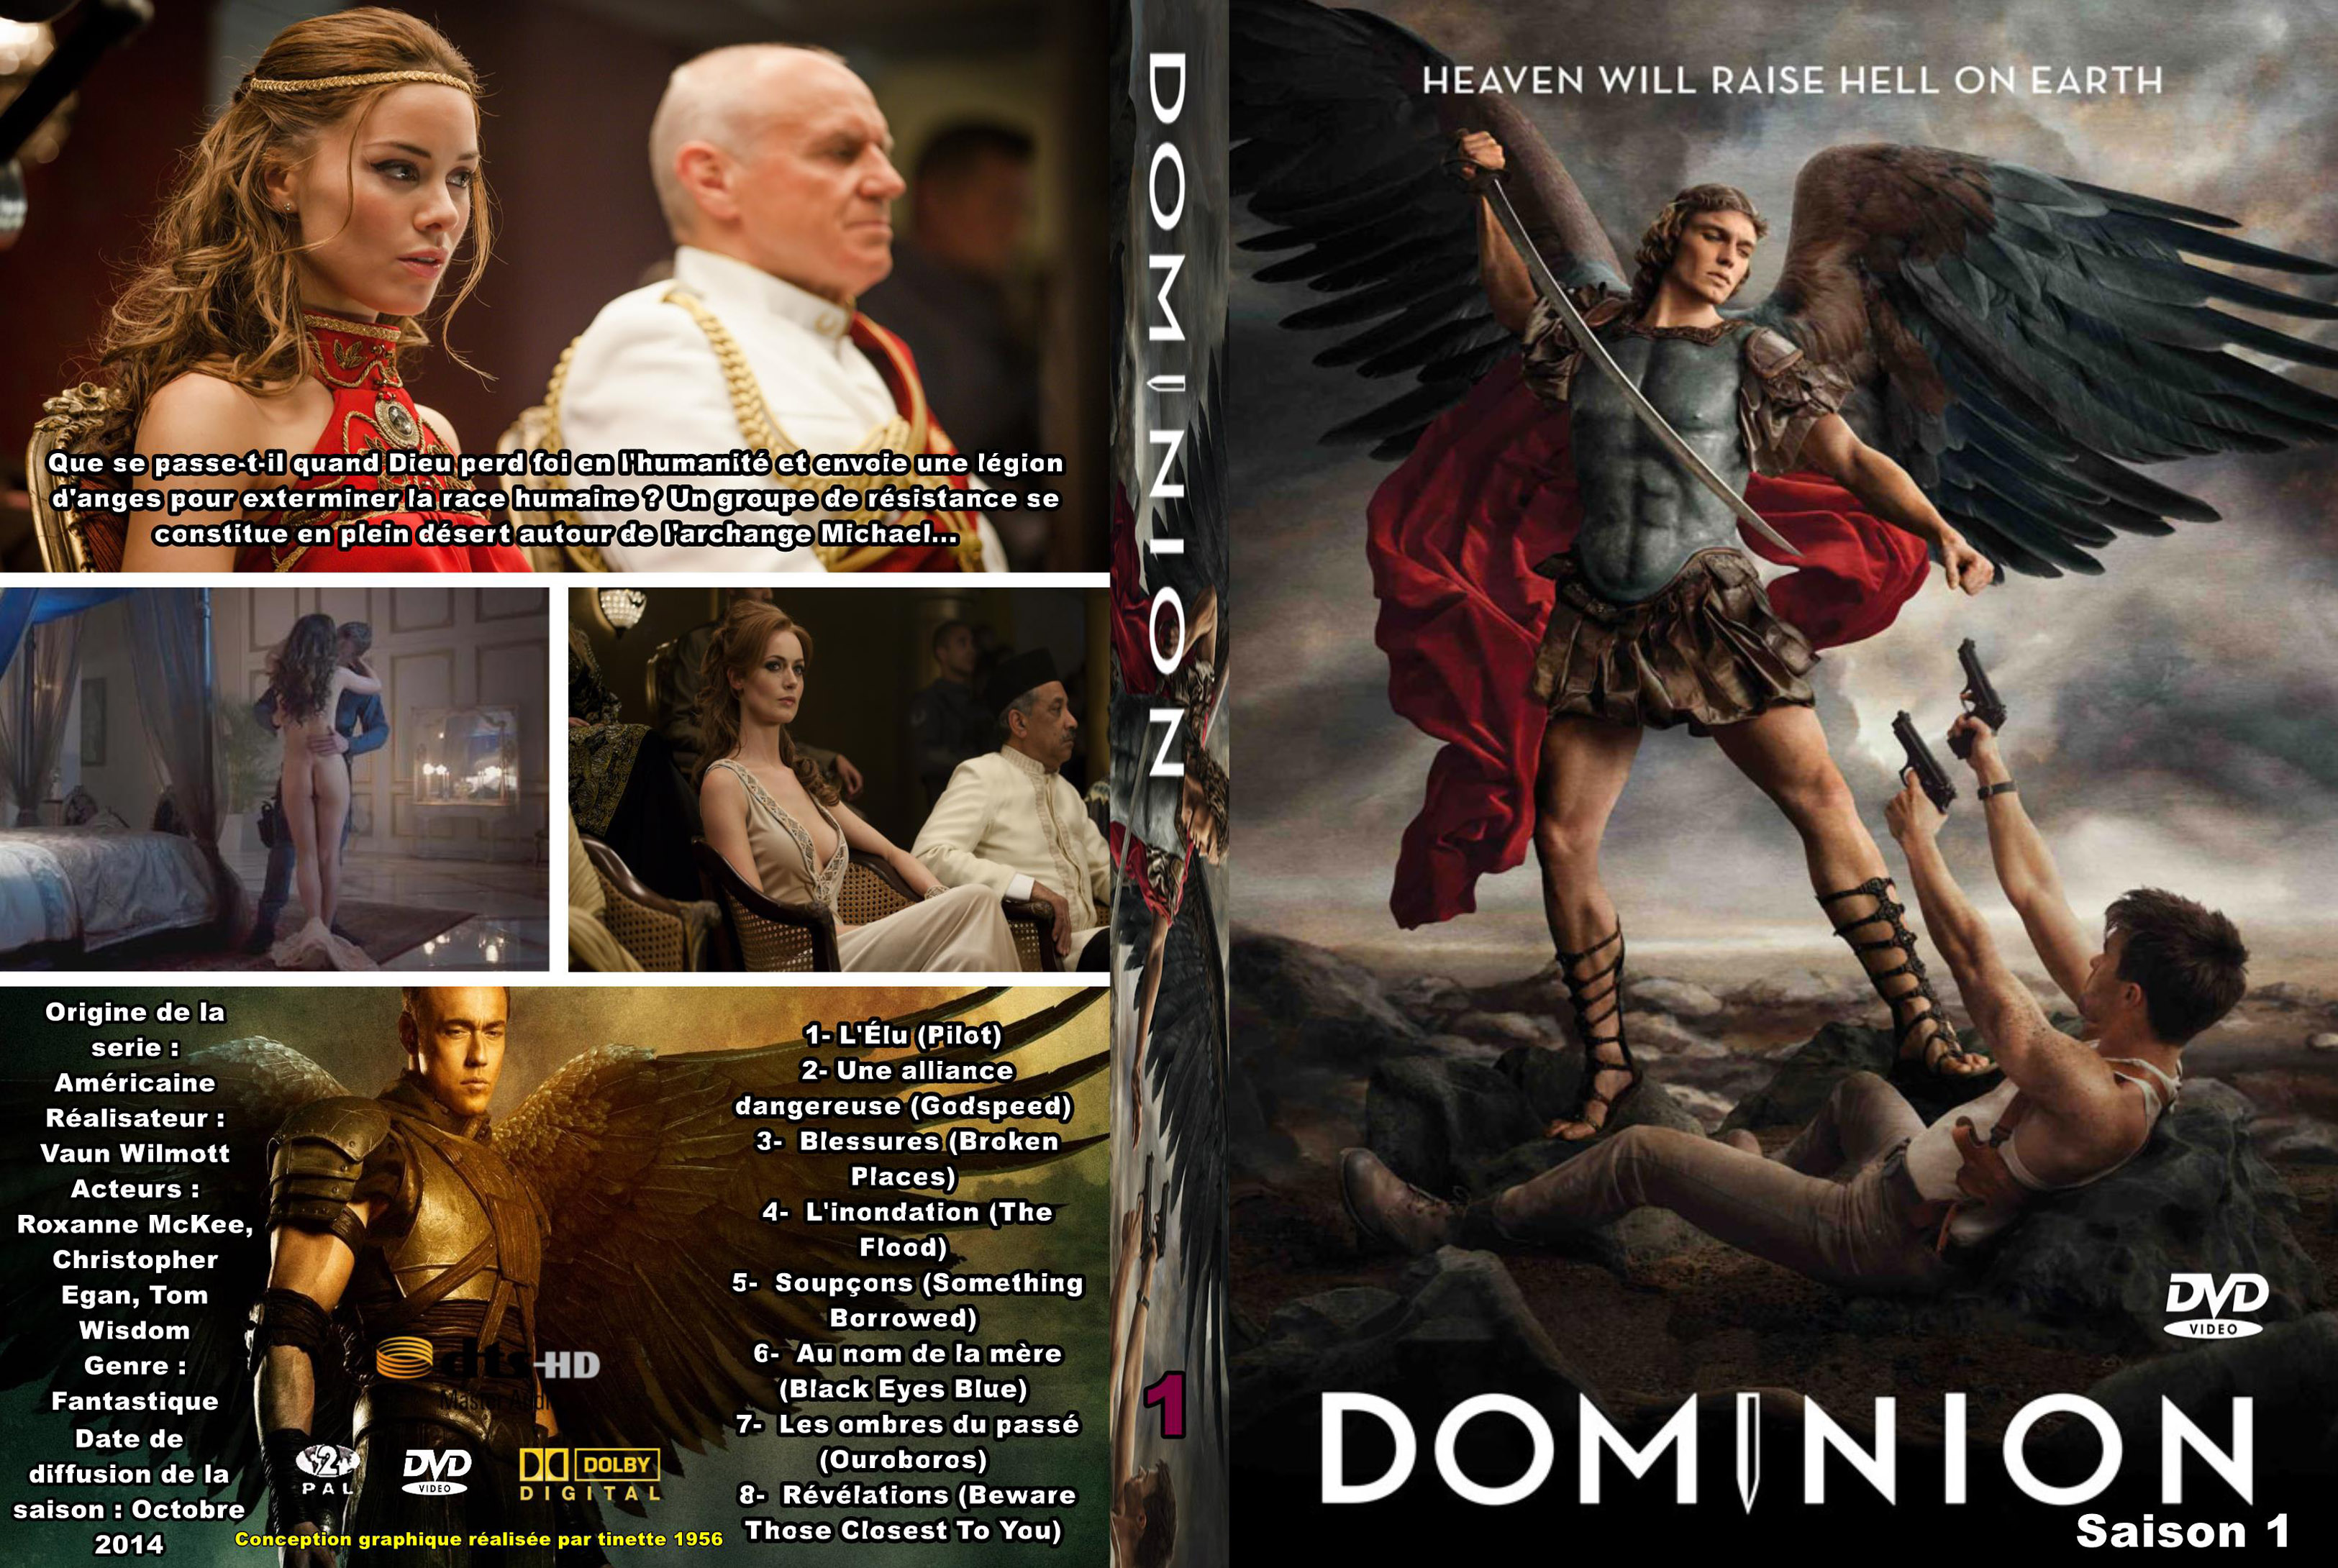 Jaquette DVD Dominion saison 1 custom